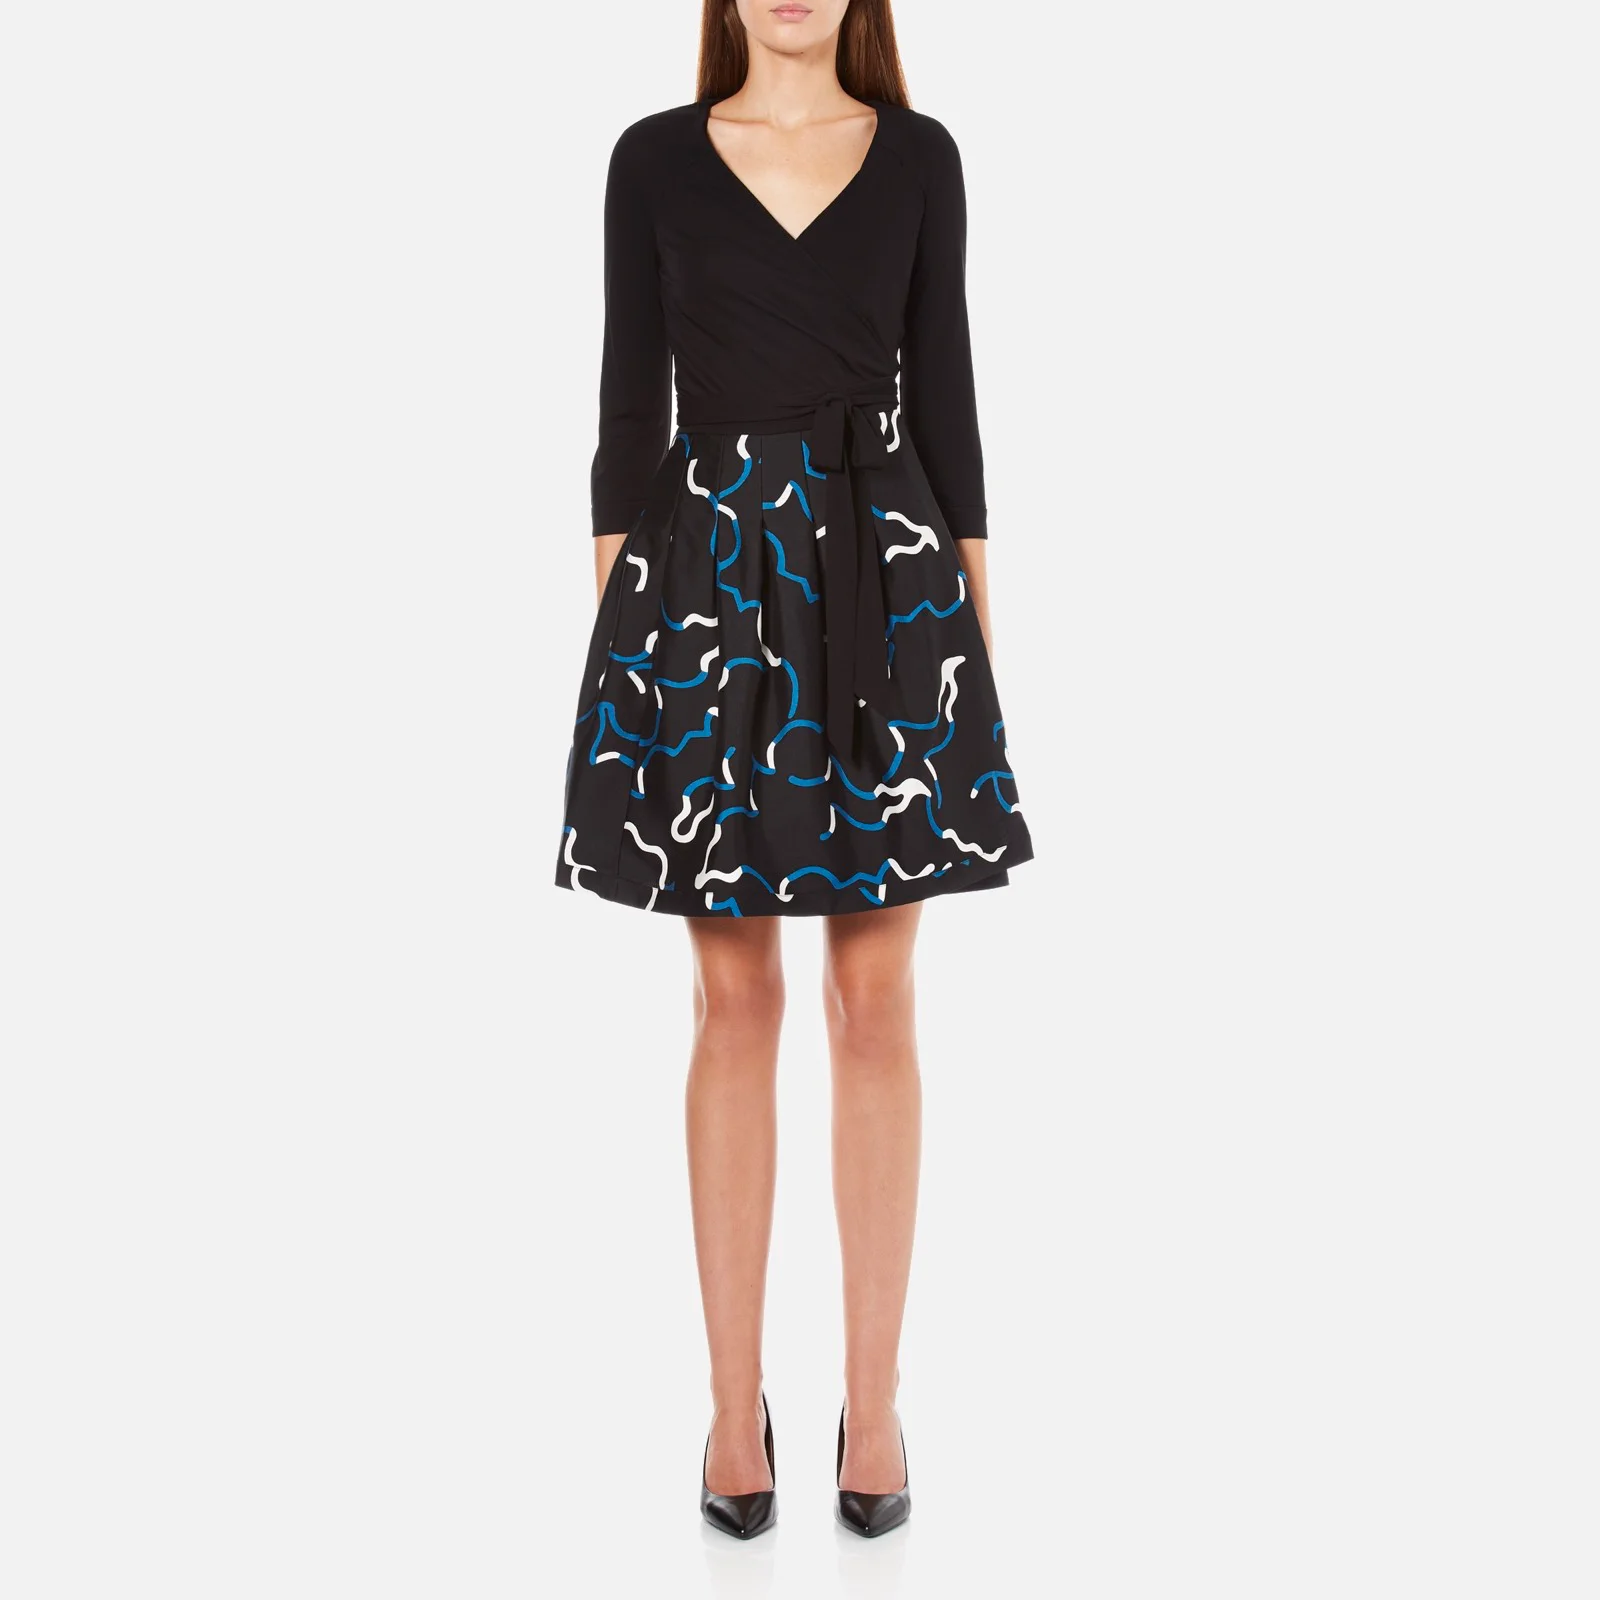 Diane von Furstenberg Women's Jewel Wrap Dress with Mikado Skirt - Black Image 1